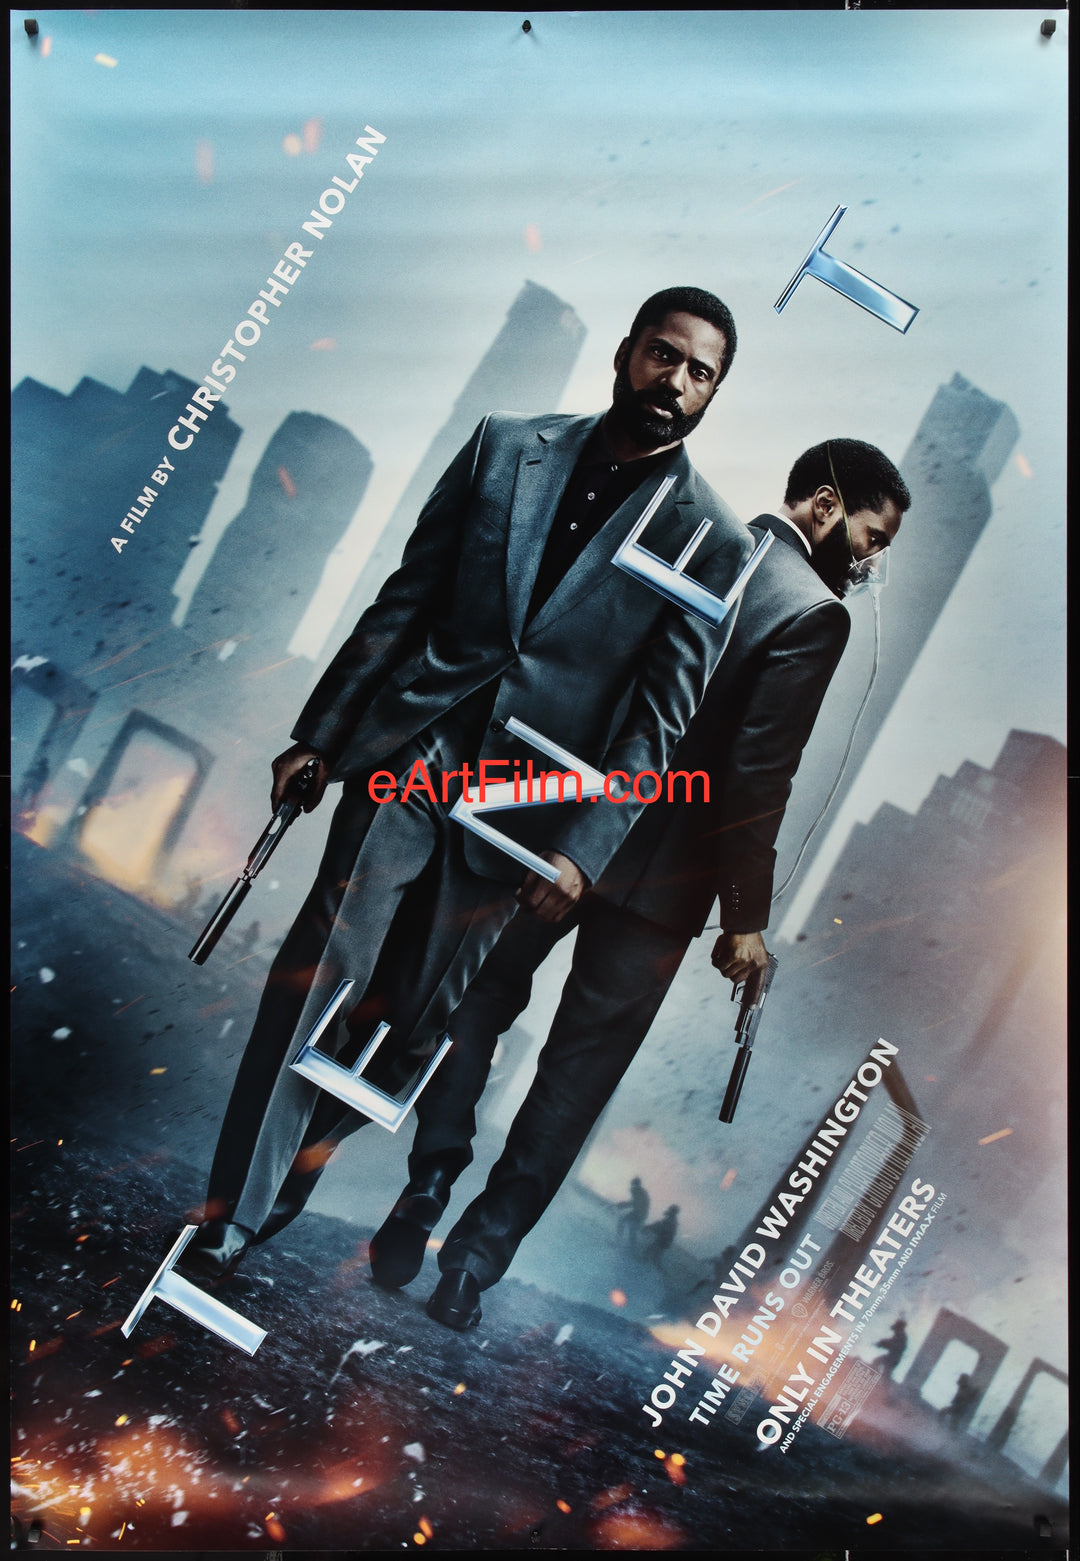 Tenet 2020 48x70 Christopher Nolan sci-fi thriller with Robert Pattinson eArtFilm movie posters